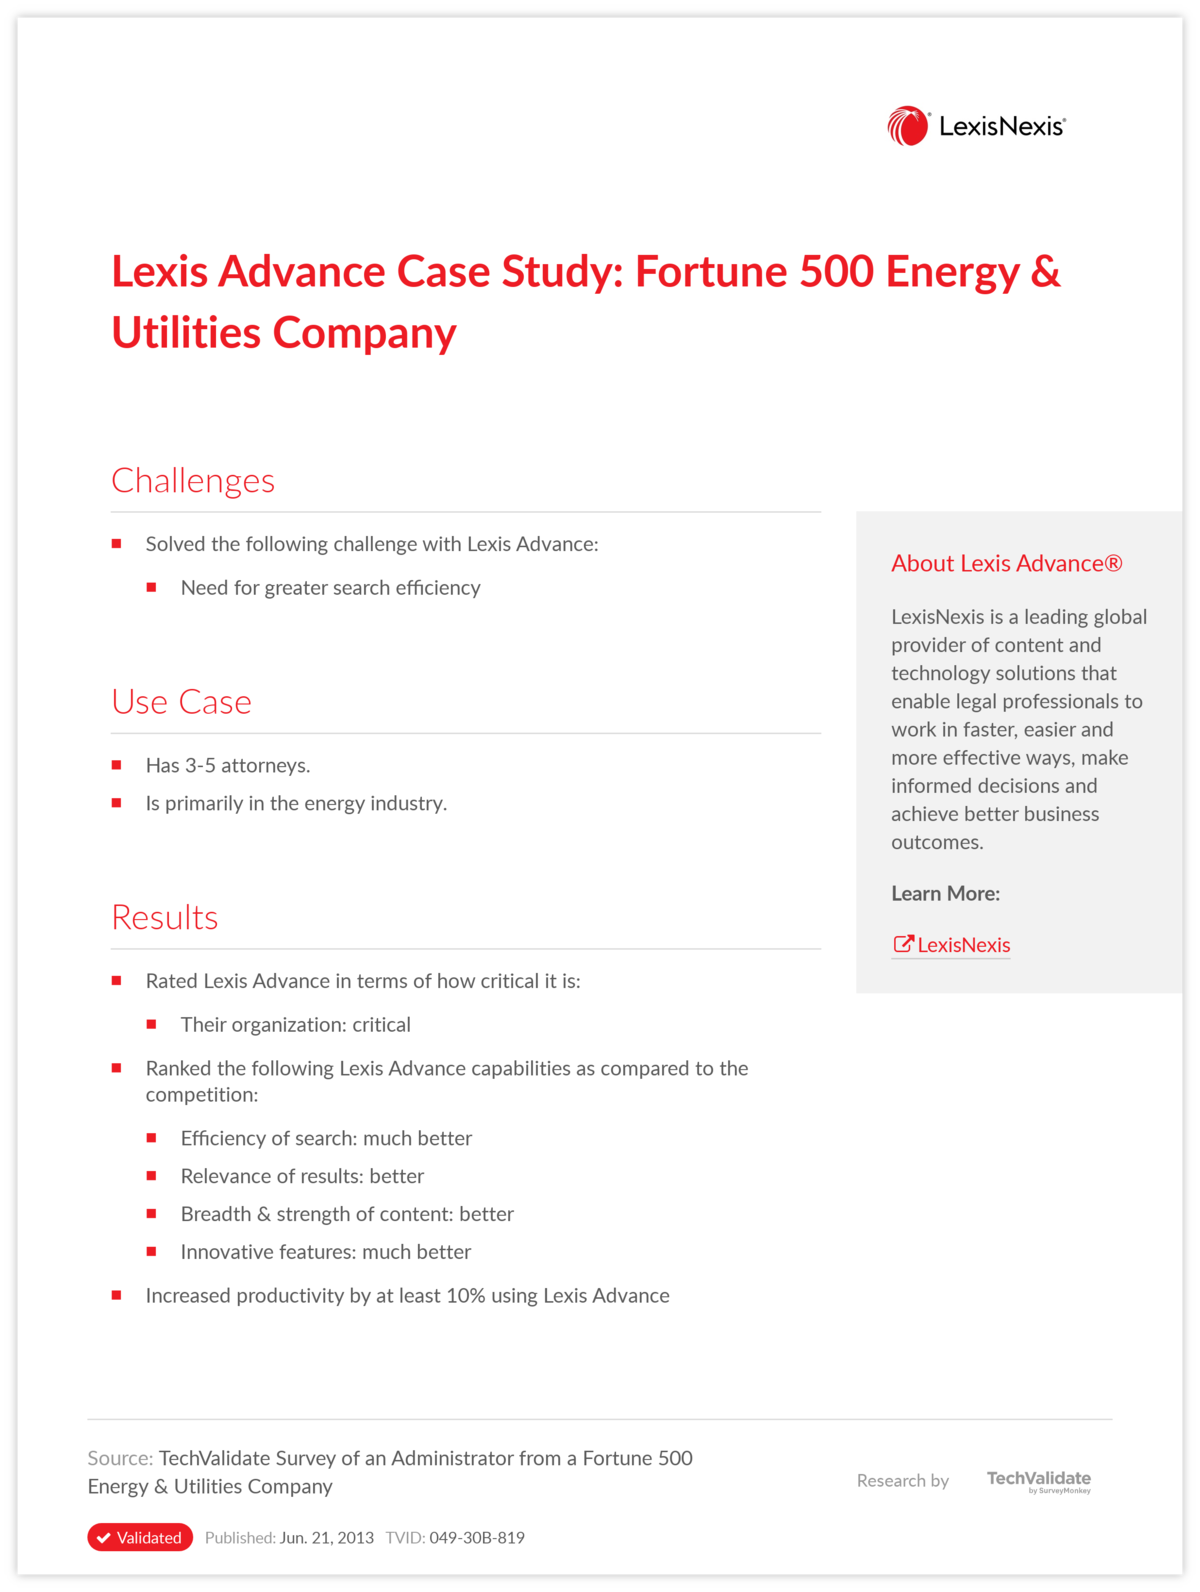 Lexis Advance Case Study: Fortune 500 Energy & Utilities Company